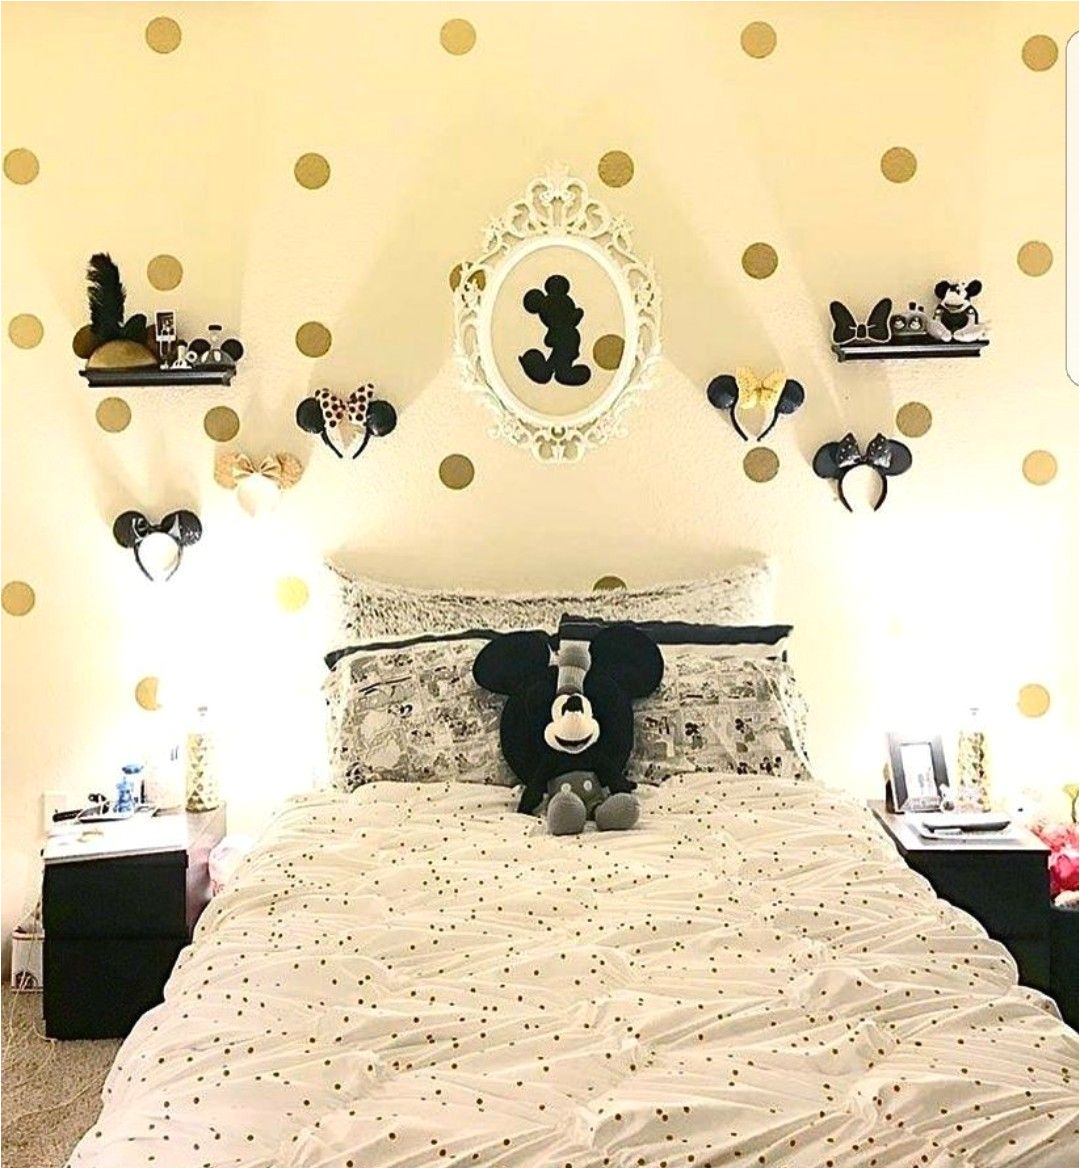 Disney Bedroom Decorations Disney Home Decor Idea Diyhomedecorcollege